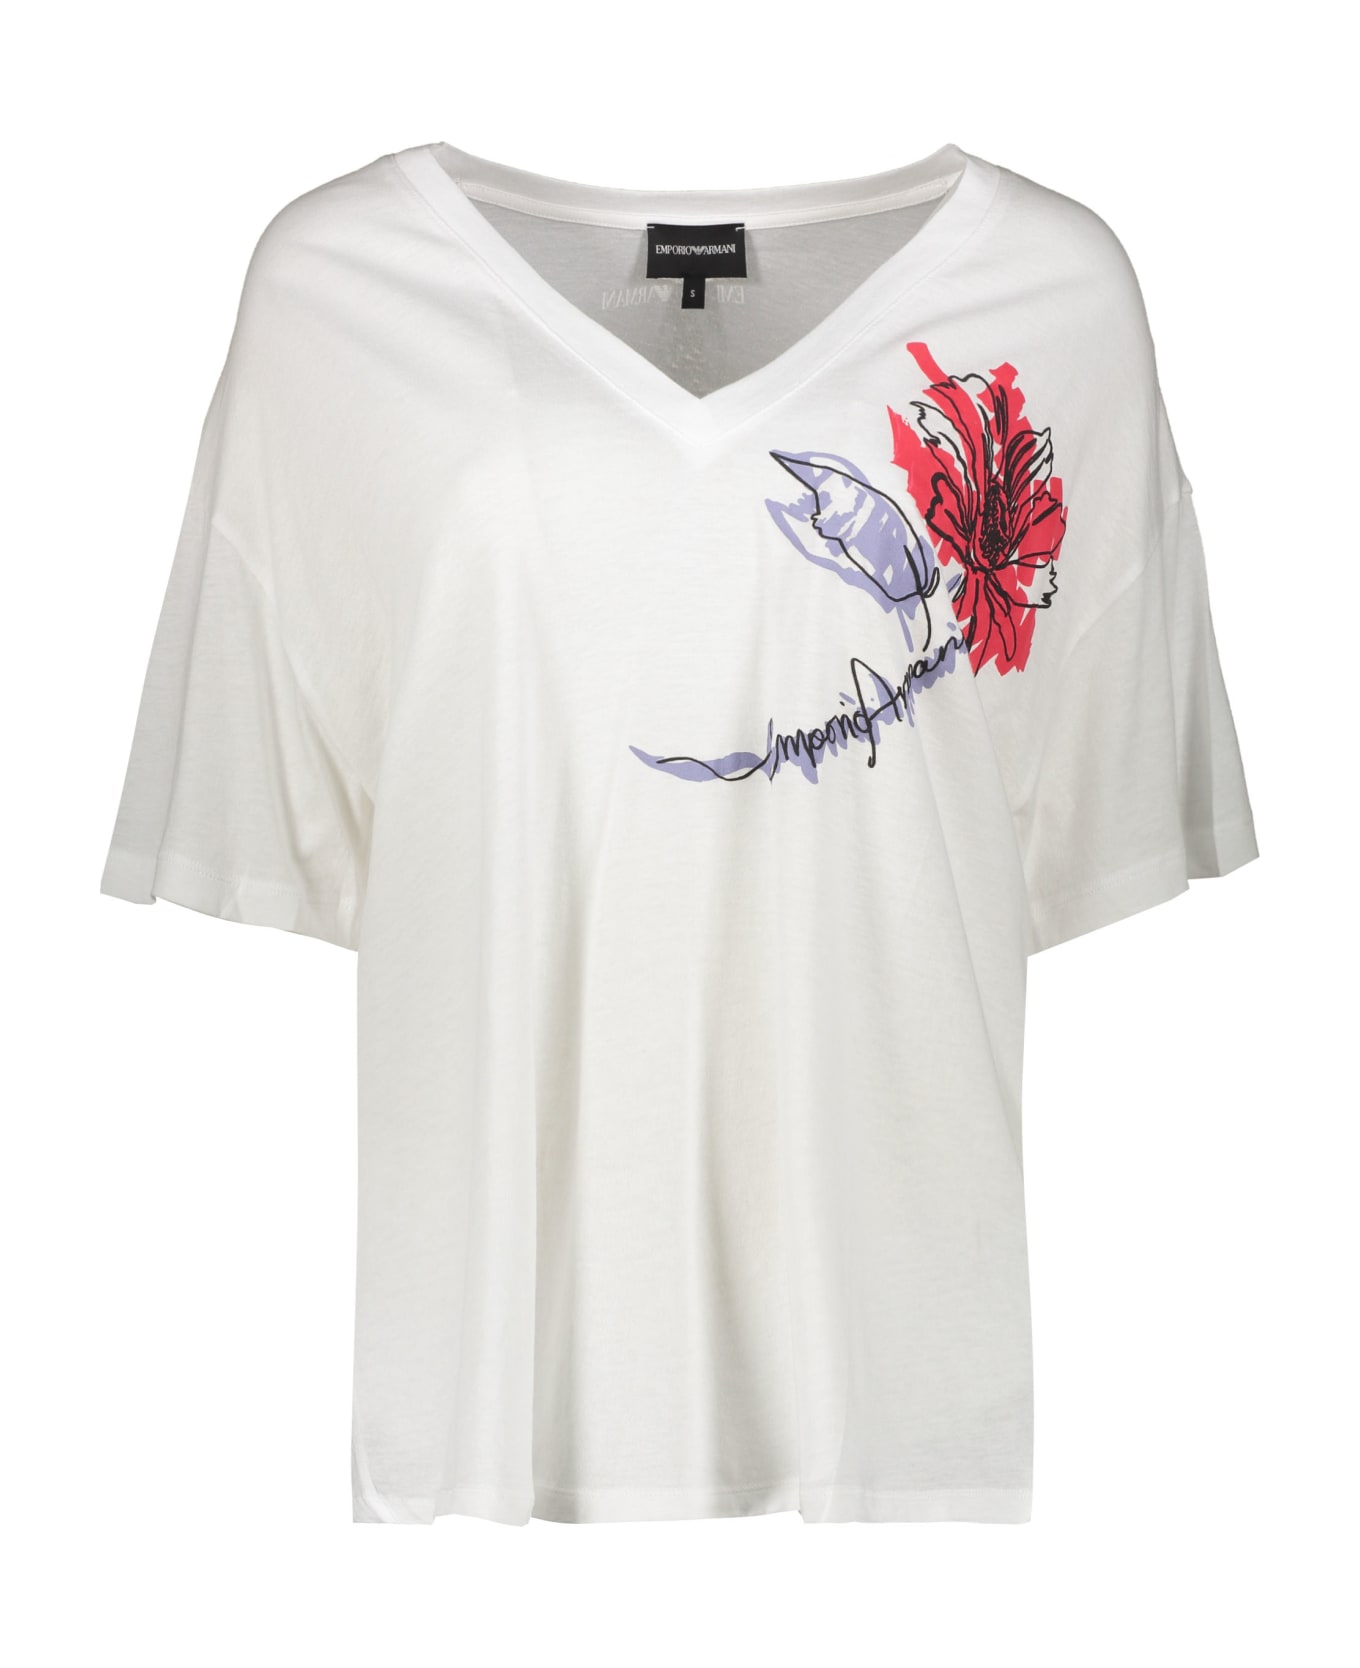 Emporio Armani Printed T-shirt - White Tシャツ